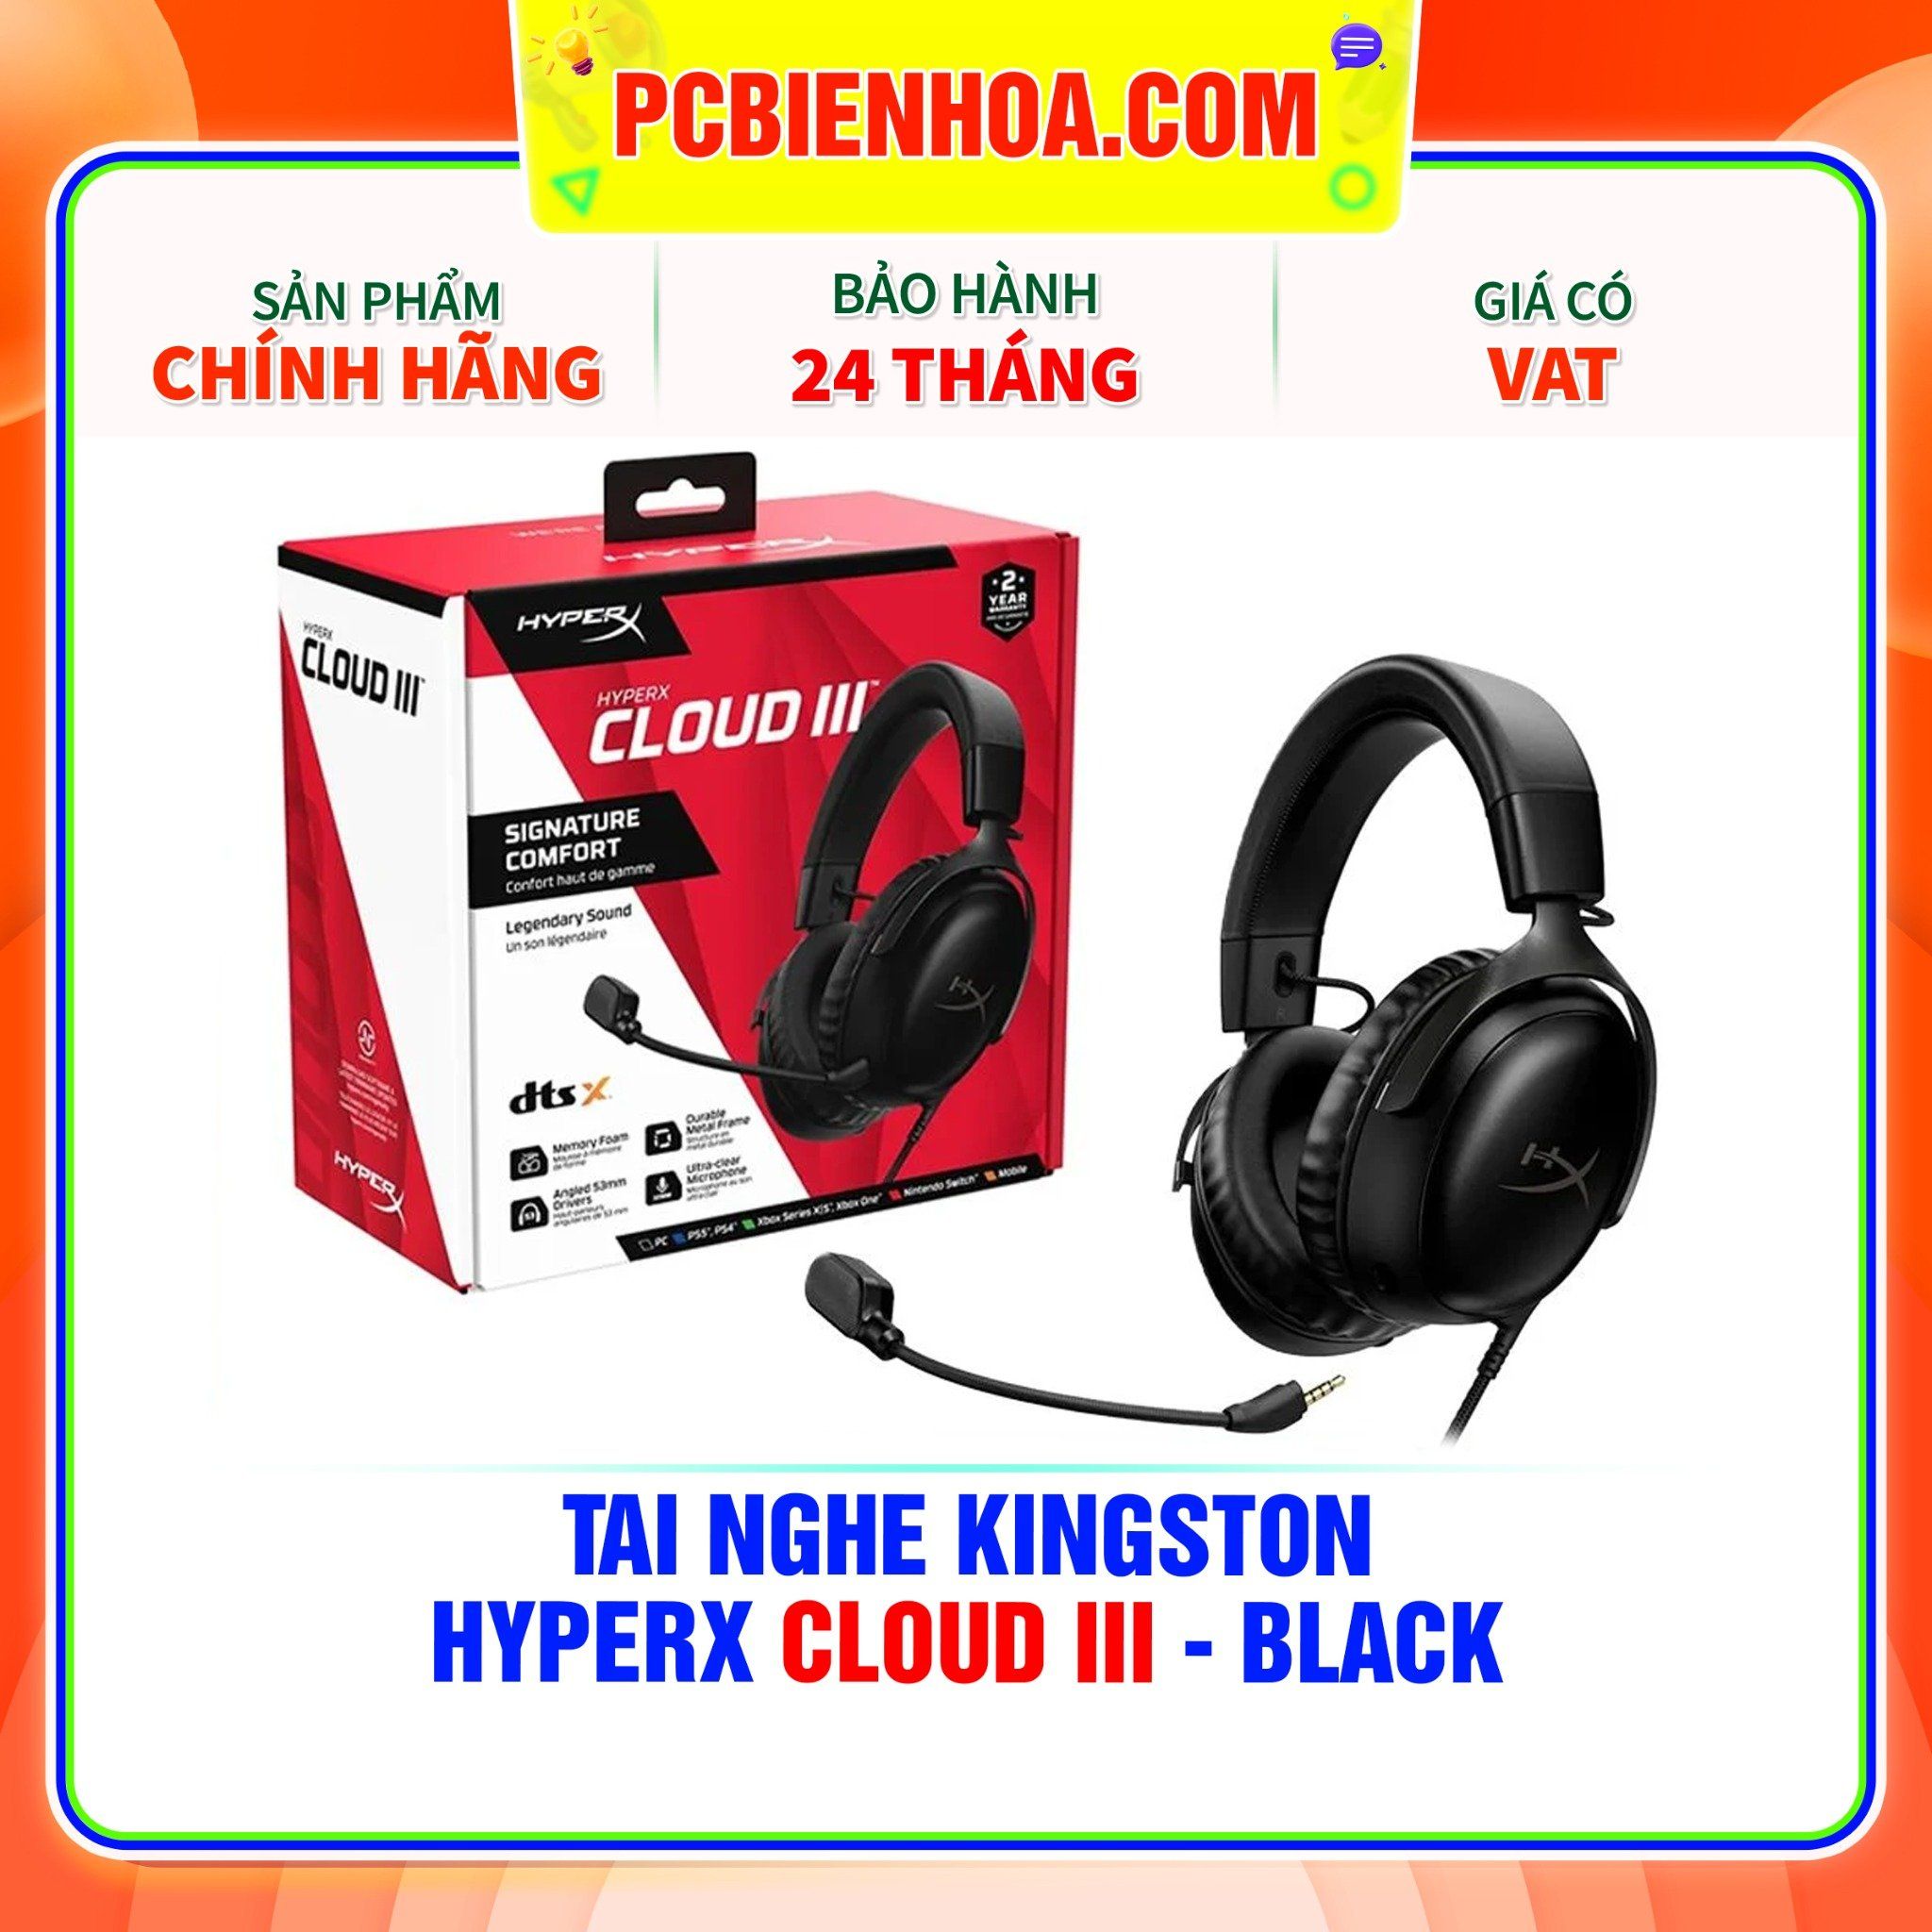  TAI NGHE KINGSTON HYPERX CLOUD III - BLACK 